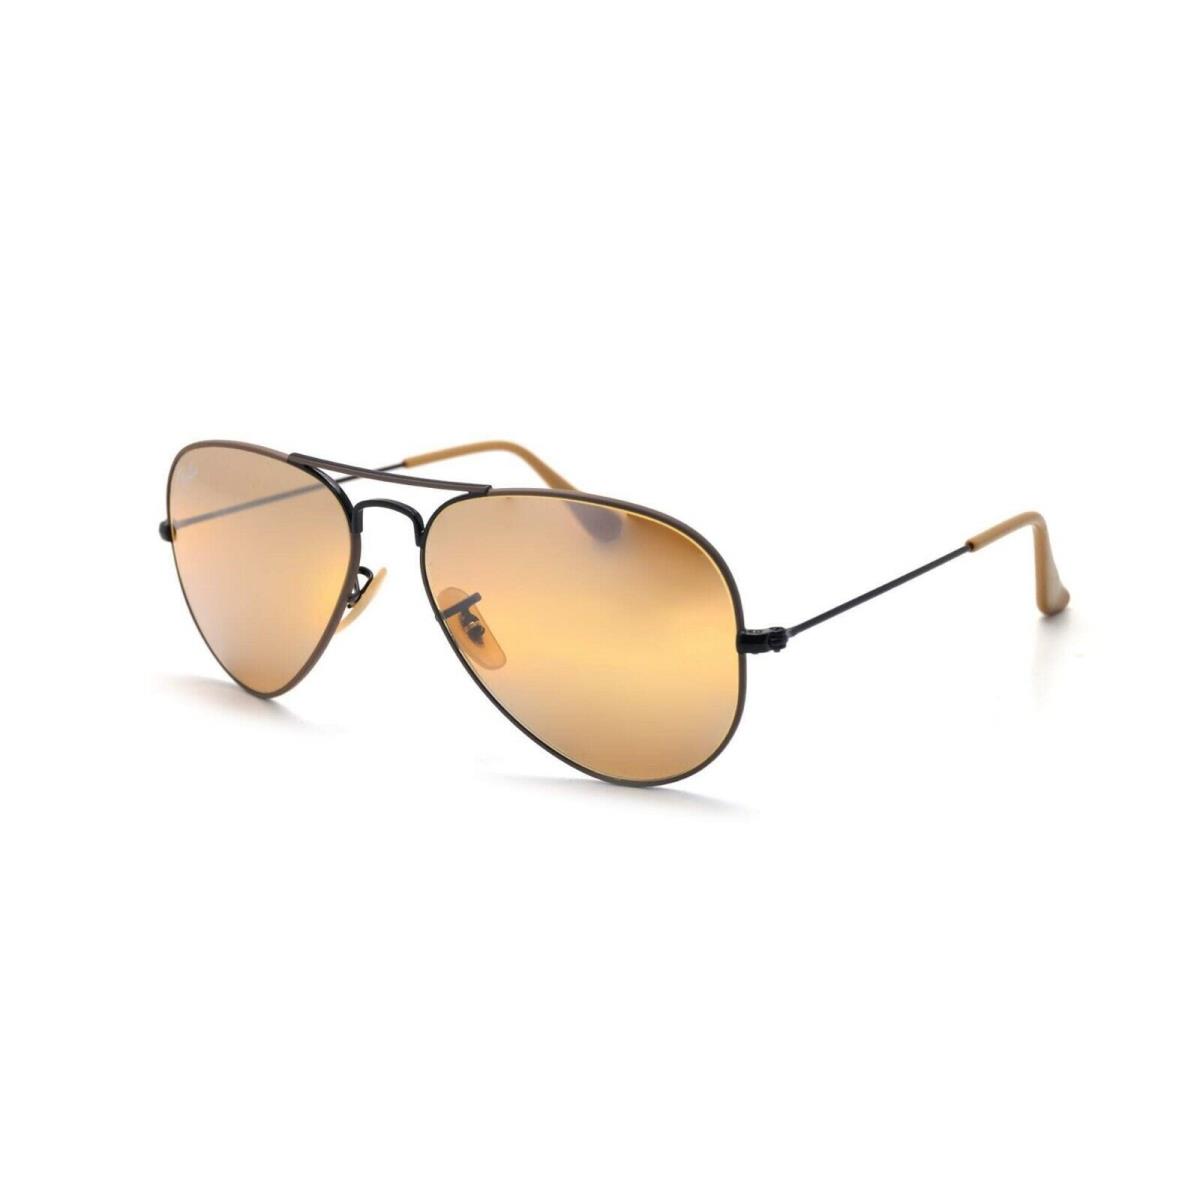 Ray Ban Sunglasses Fashion Aviator RB3025 9153/AG Yellow Bi-mirror Shades - Frame: black on beige, Lens: Yellow bi-mirror grey